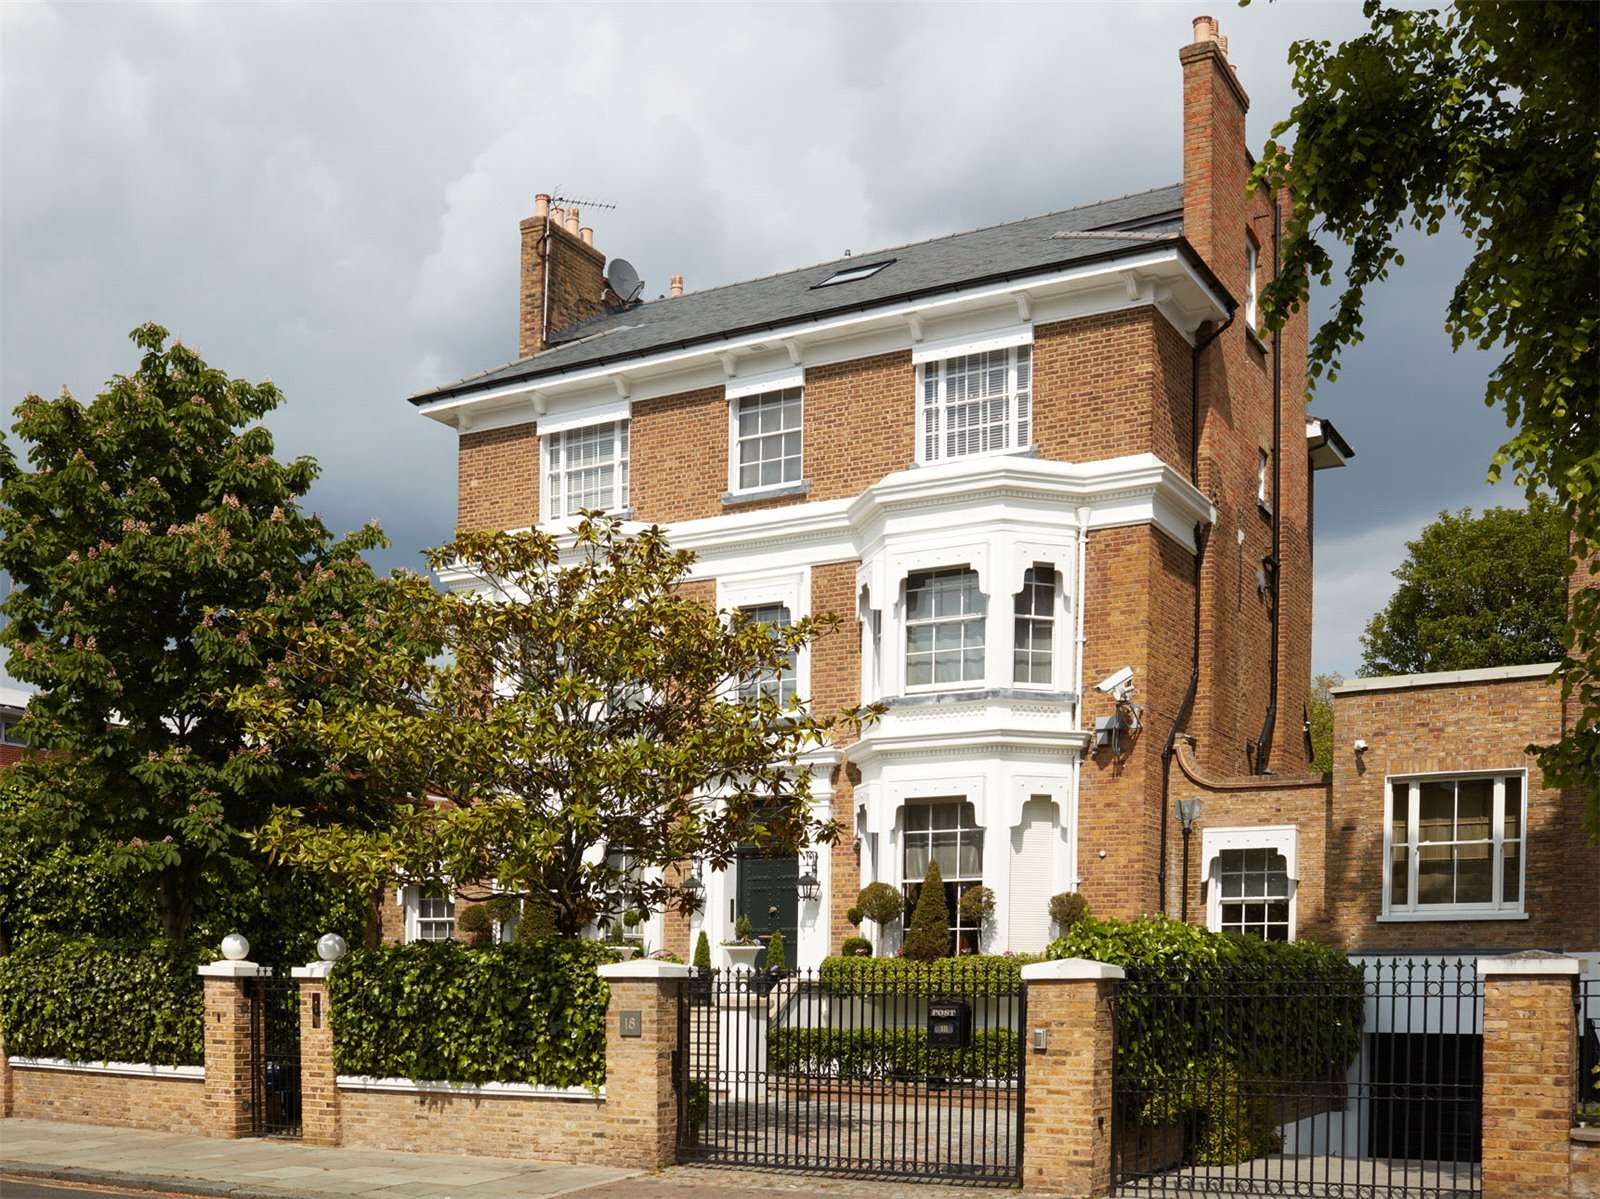 Holland Villas Road, London, W14 8BT | Property for sale | Savills